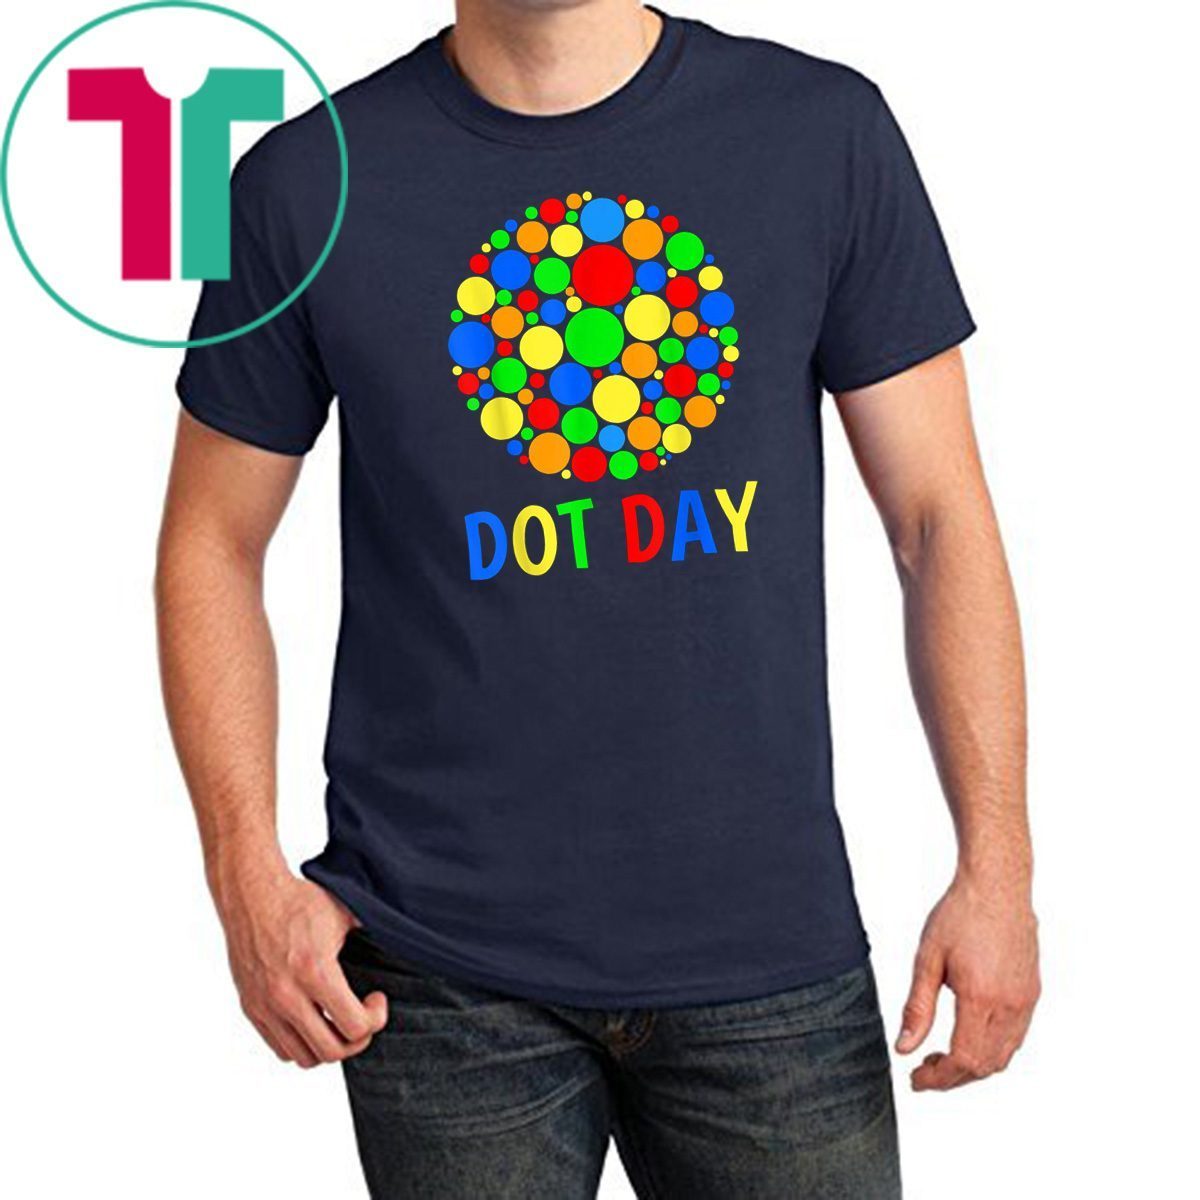 Dot Day T-shirts